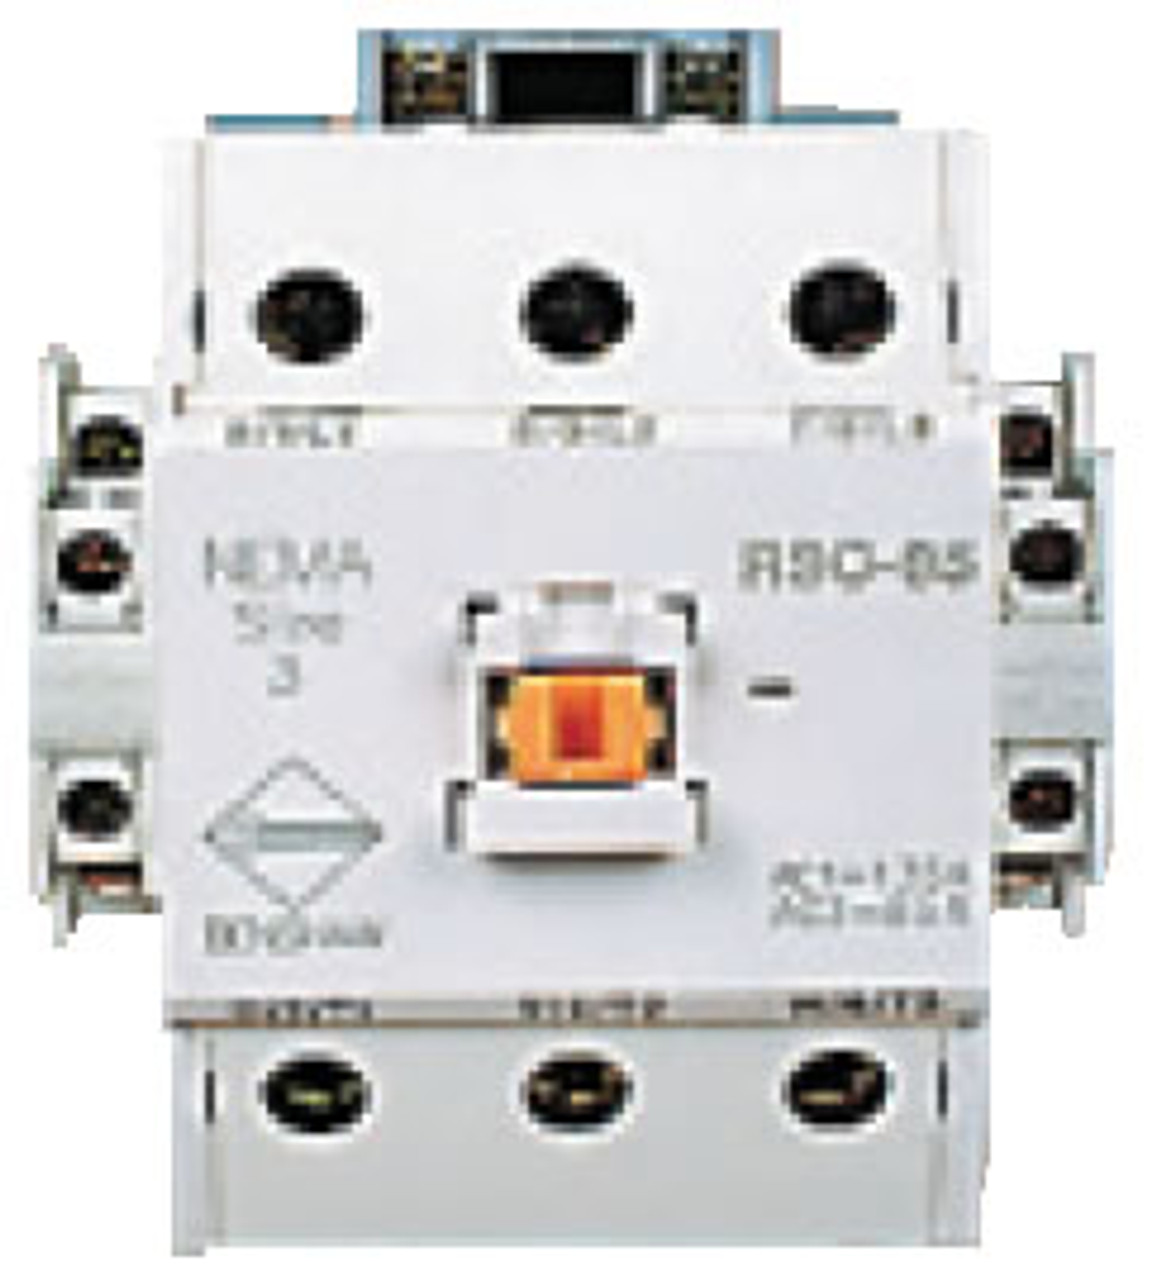 Benshaw RSC-65-6AC240 contactor